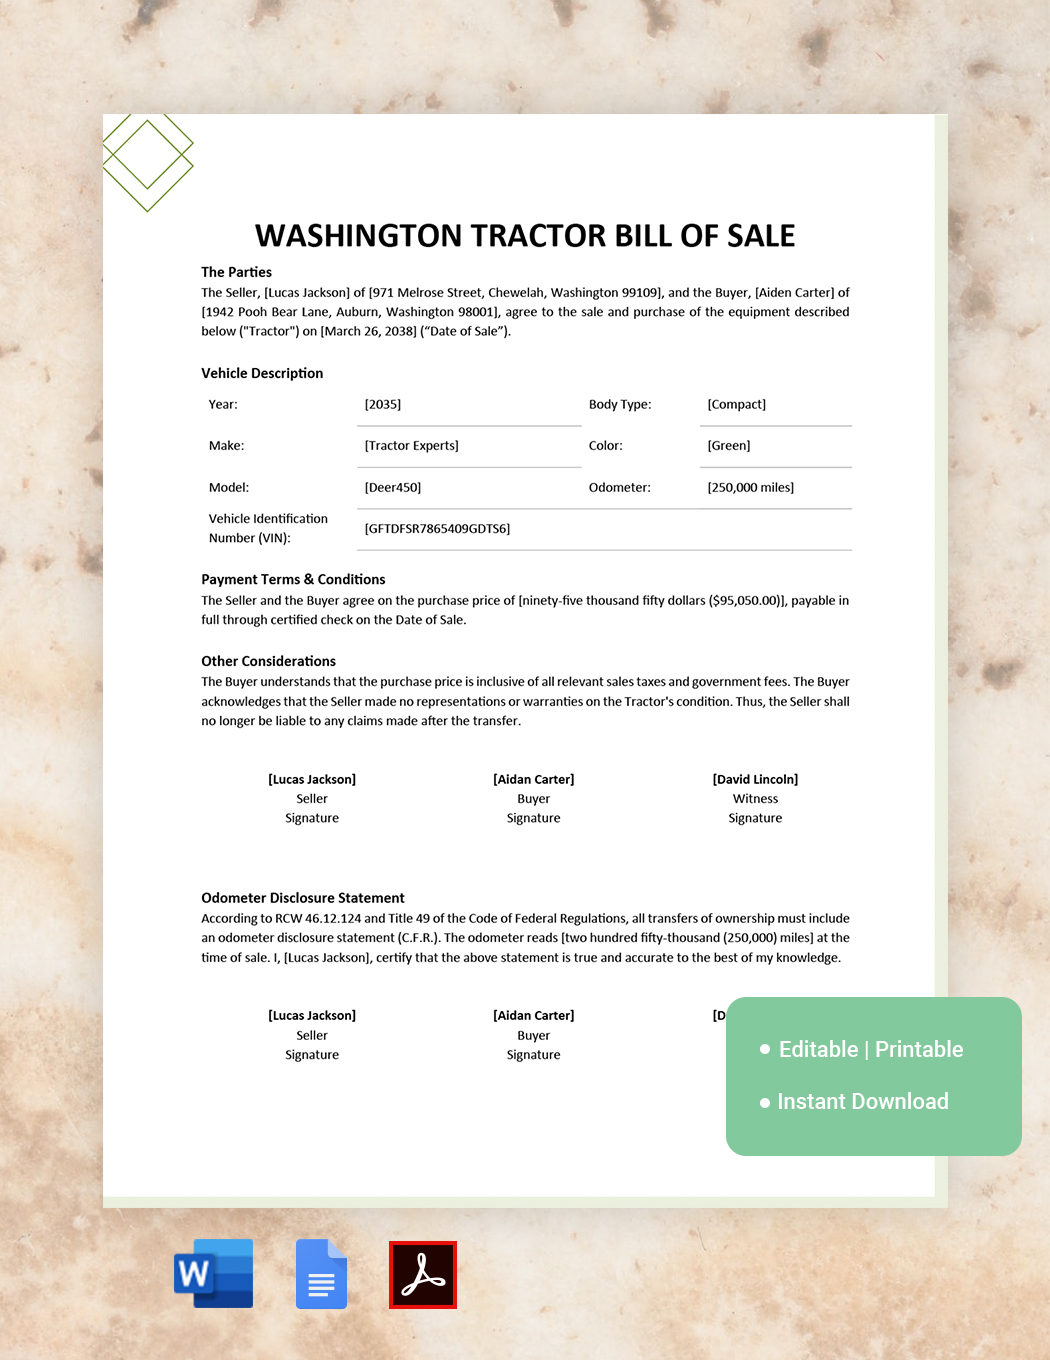 Washington Tractor Bill of Sale Template Google Docs, Word, PDF